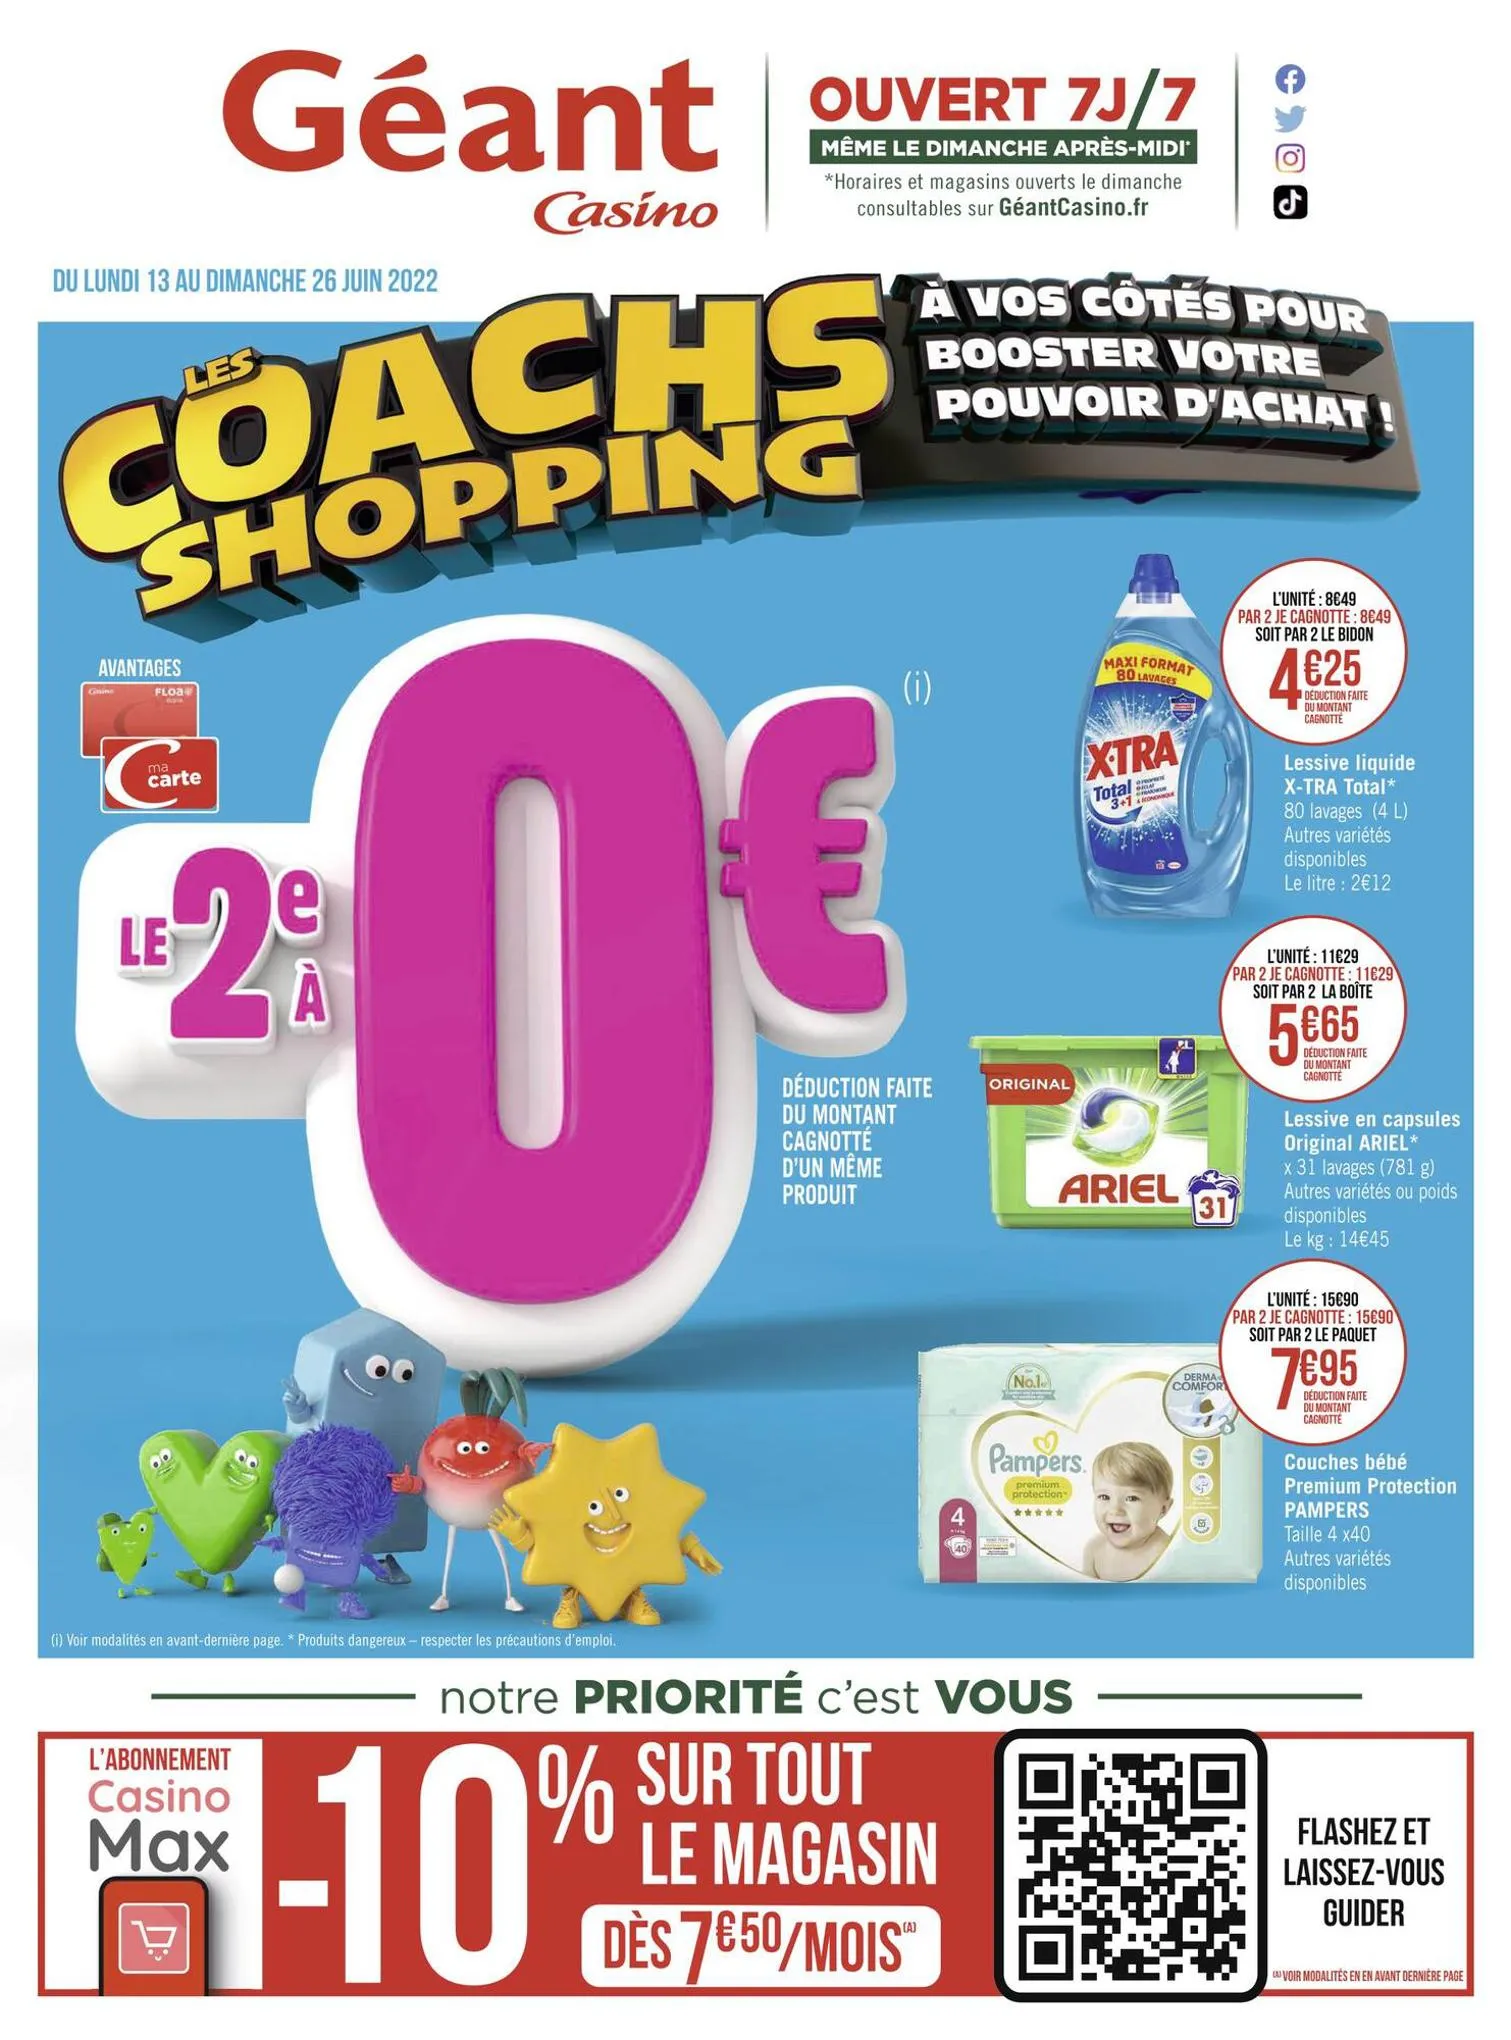 Catalogue Les coachs shopping, page 00084